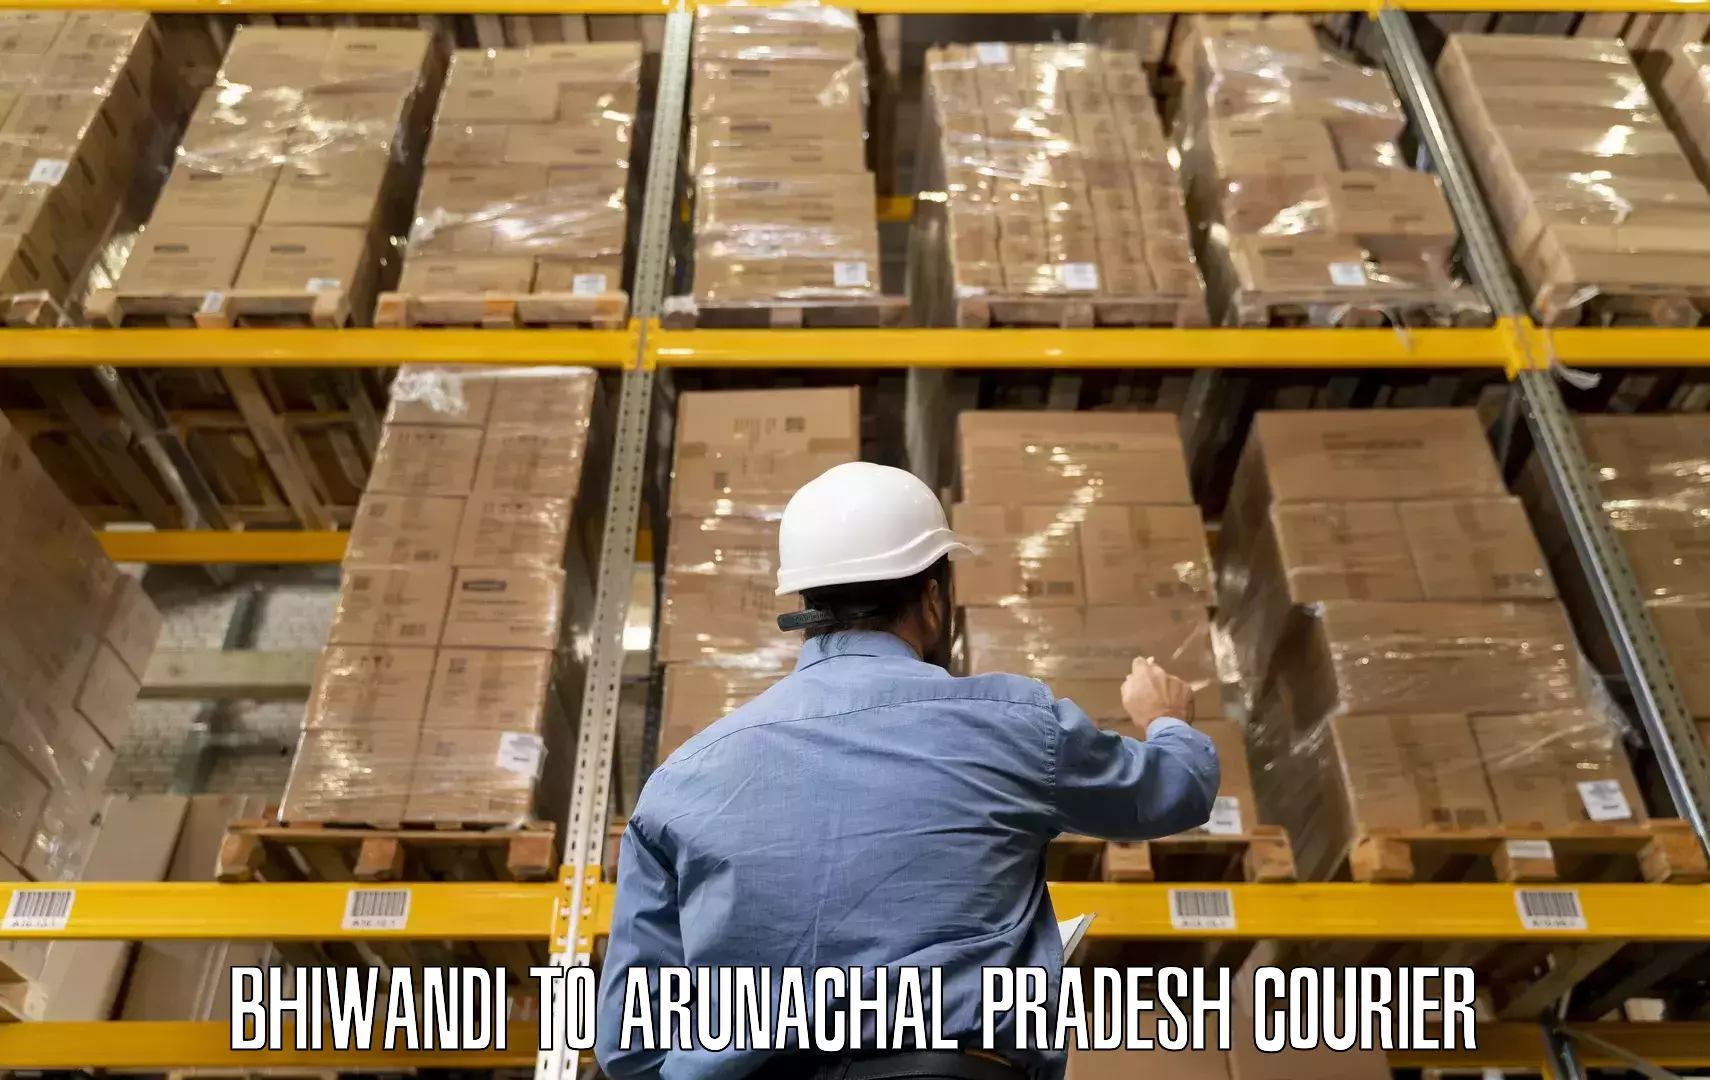 Furniture delivery service Bhiwandi to Arunachal Pradesh